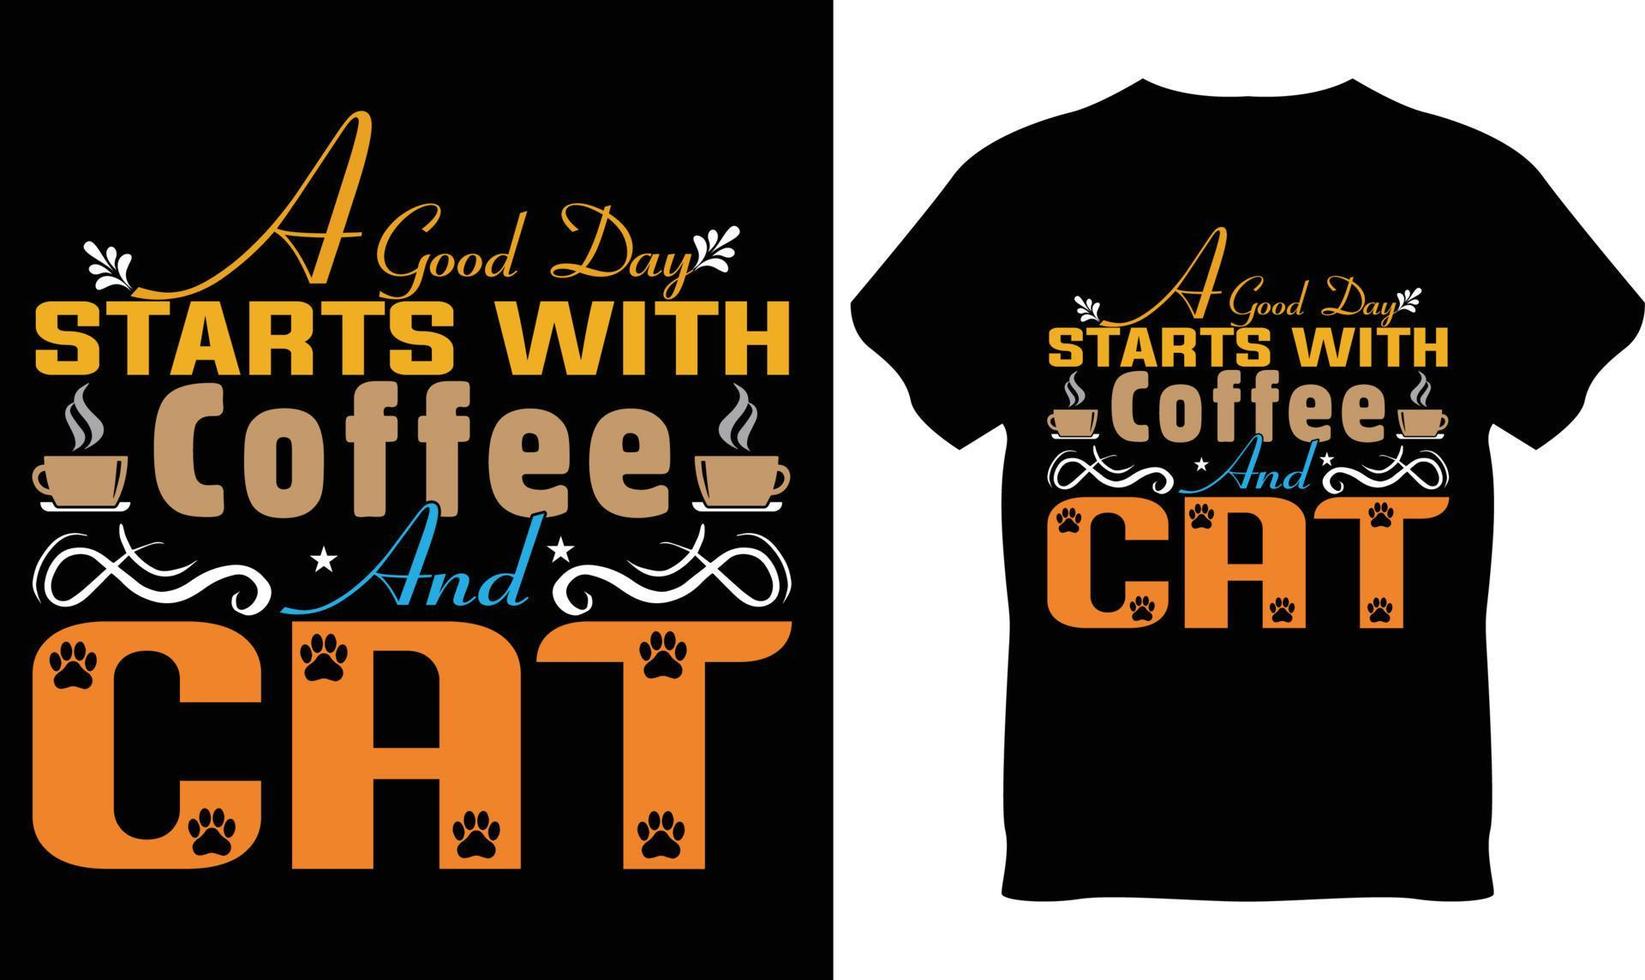 Cat Lover T-Shirt Design vector